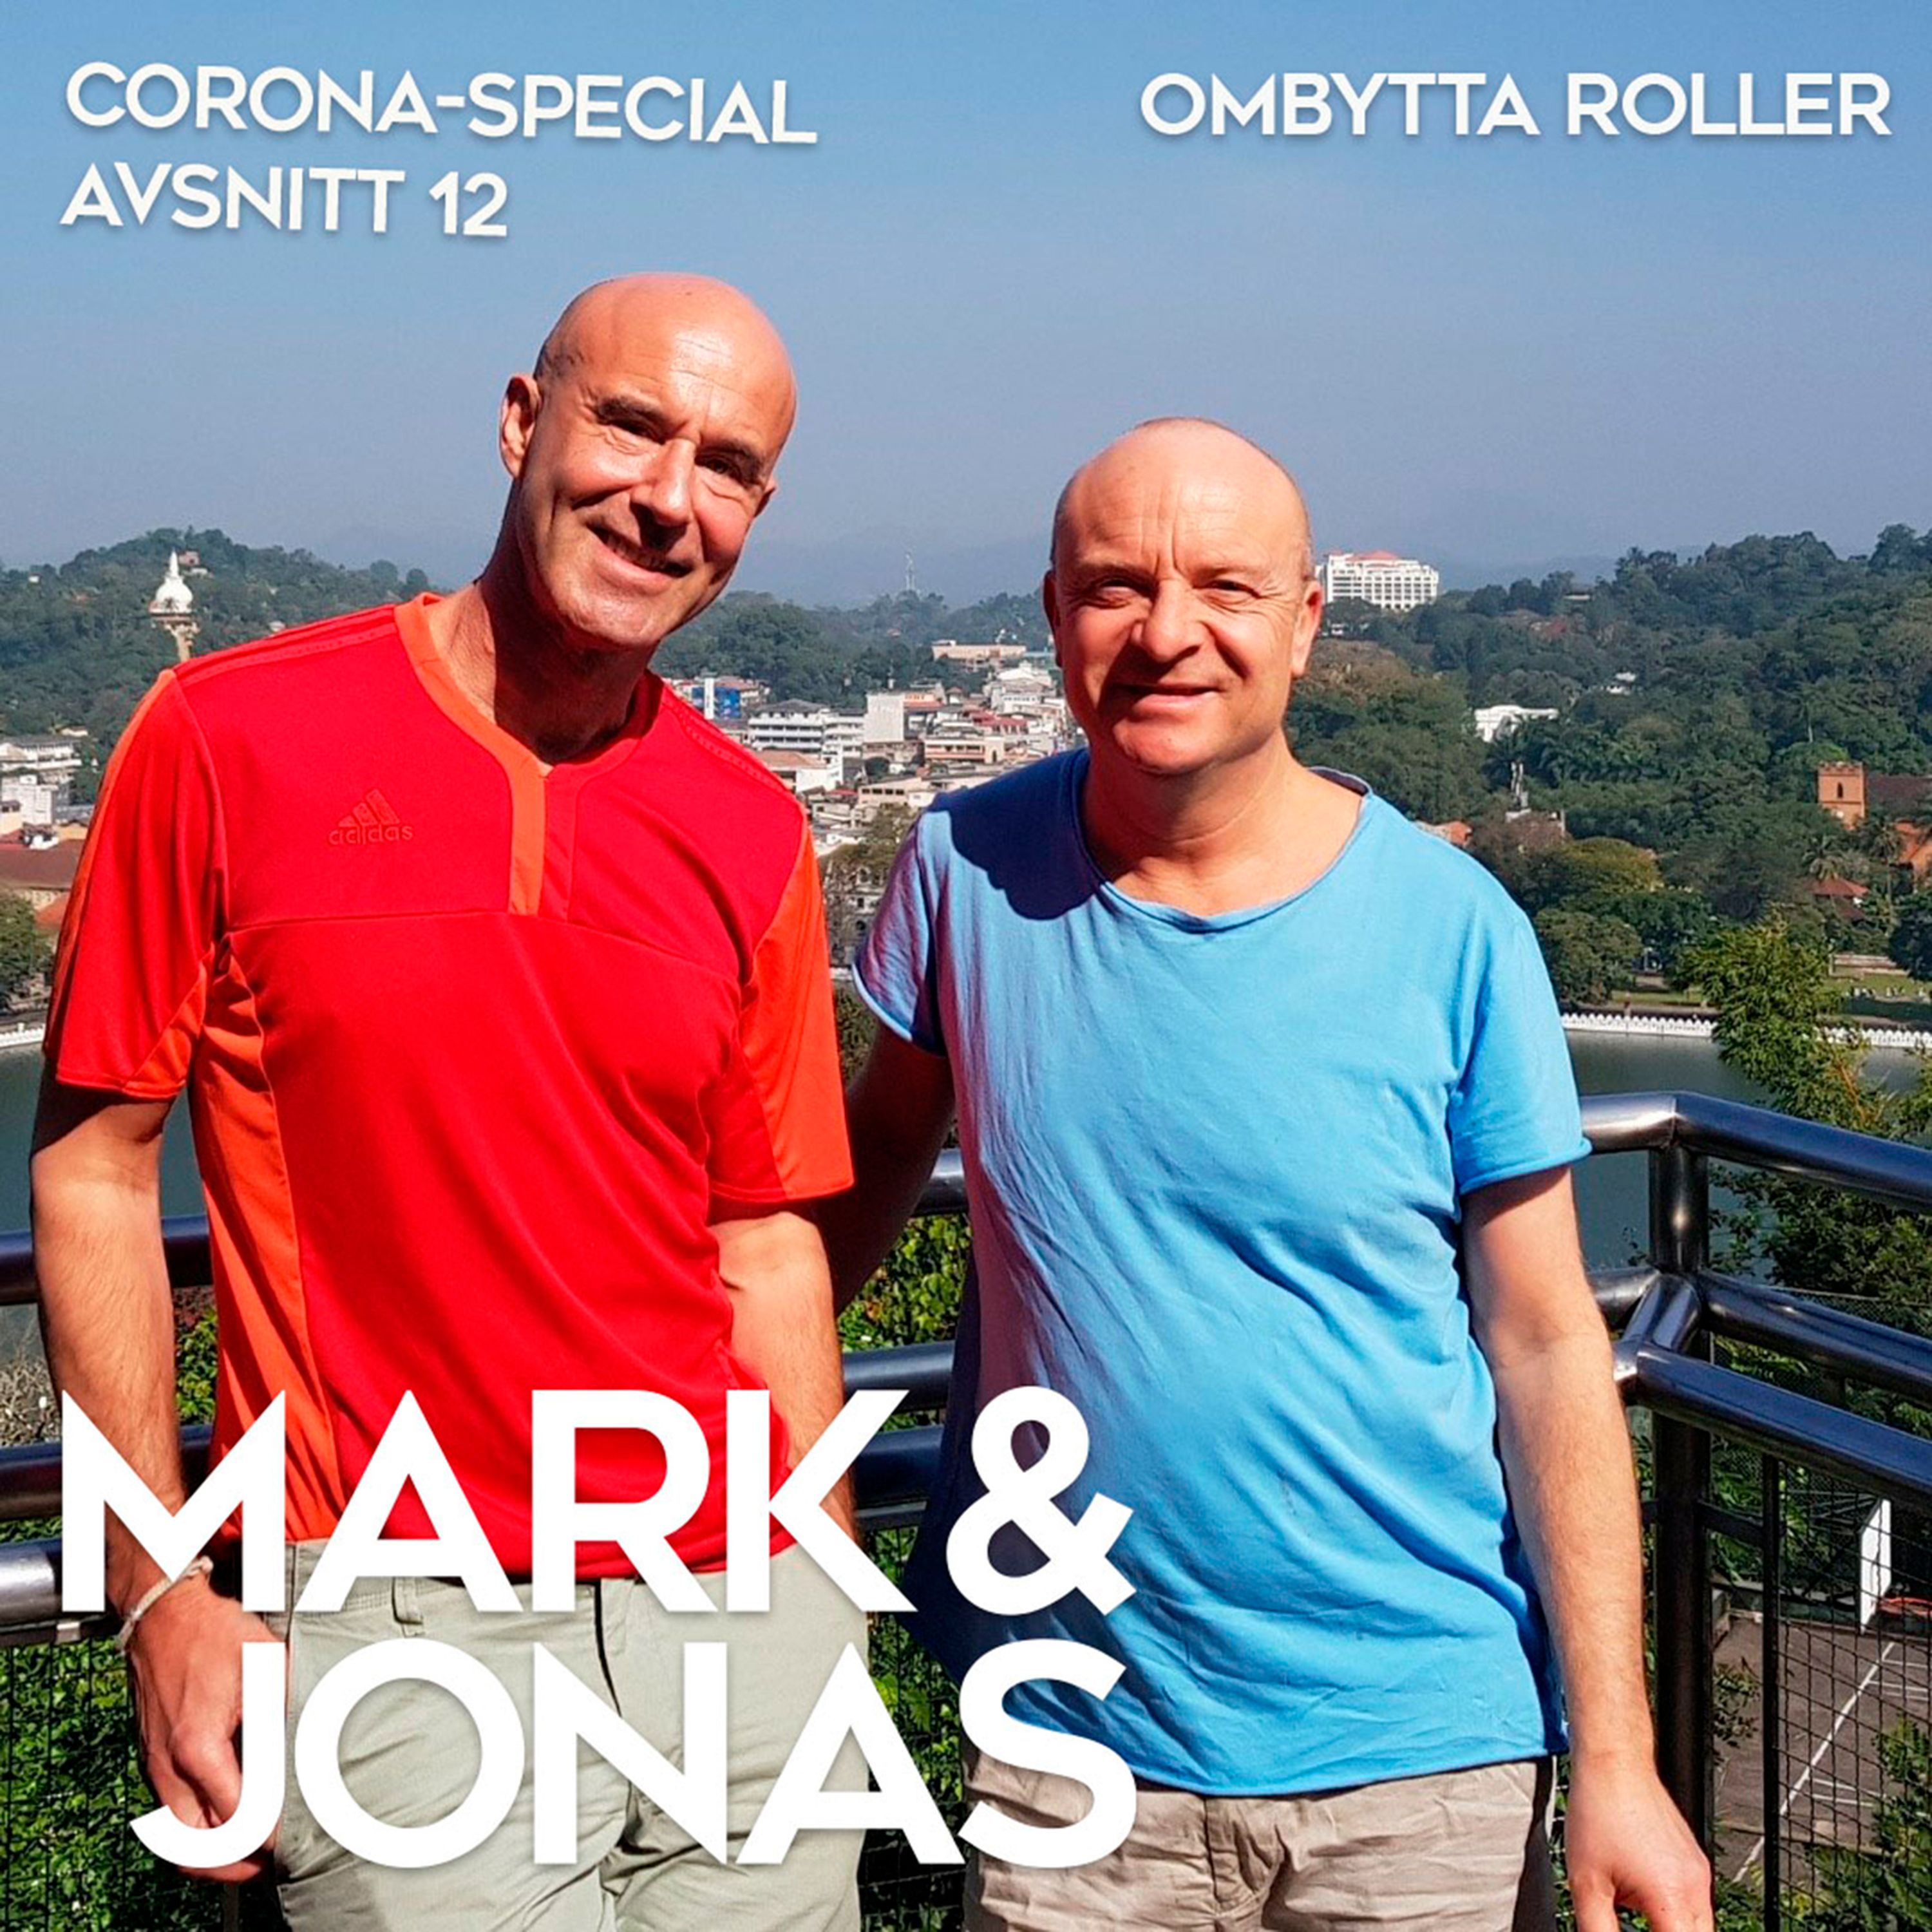 Corona-special A12 Ombytta roller